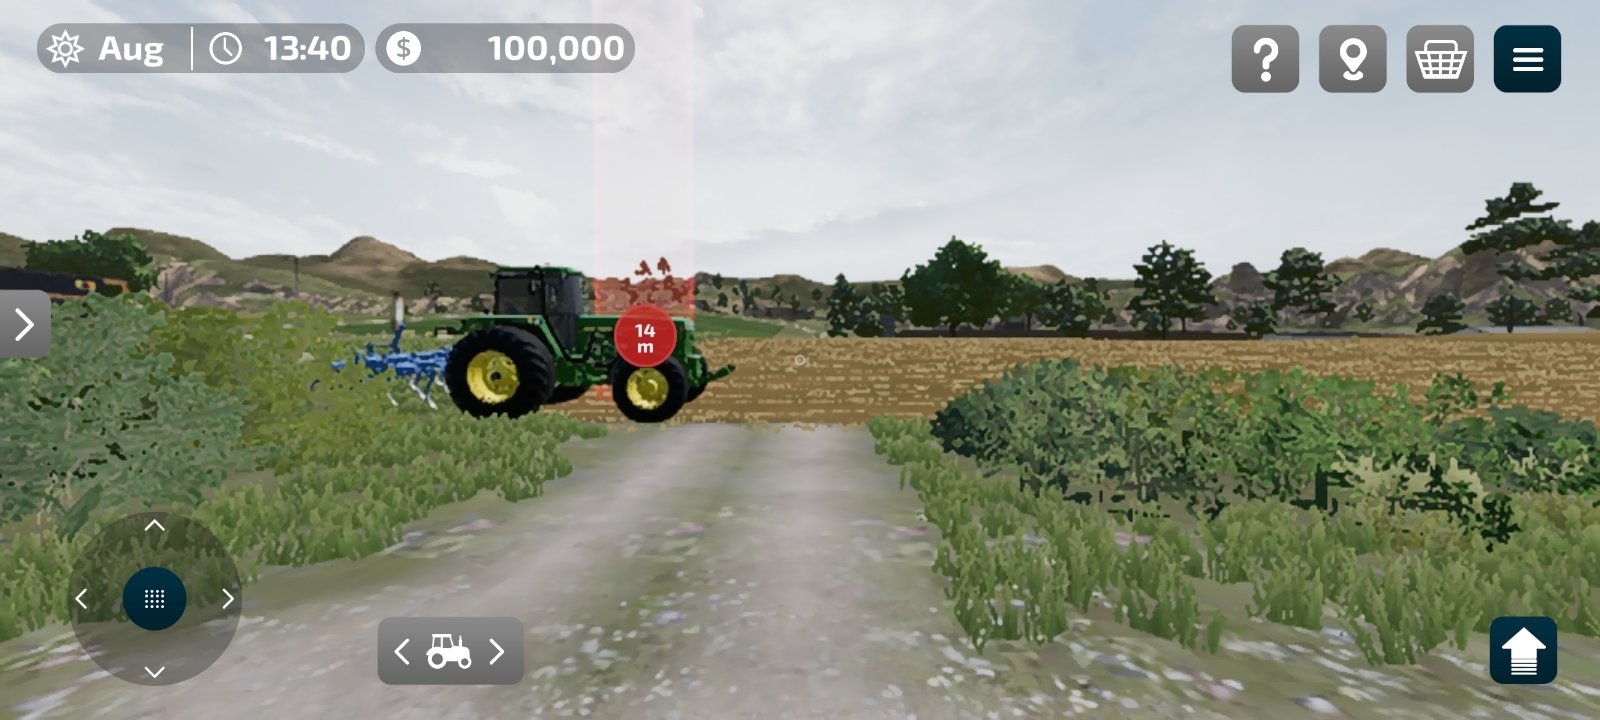 Farming simulator 19 for pc